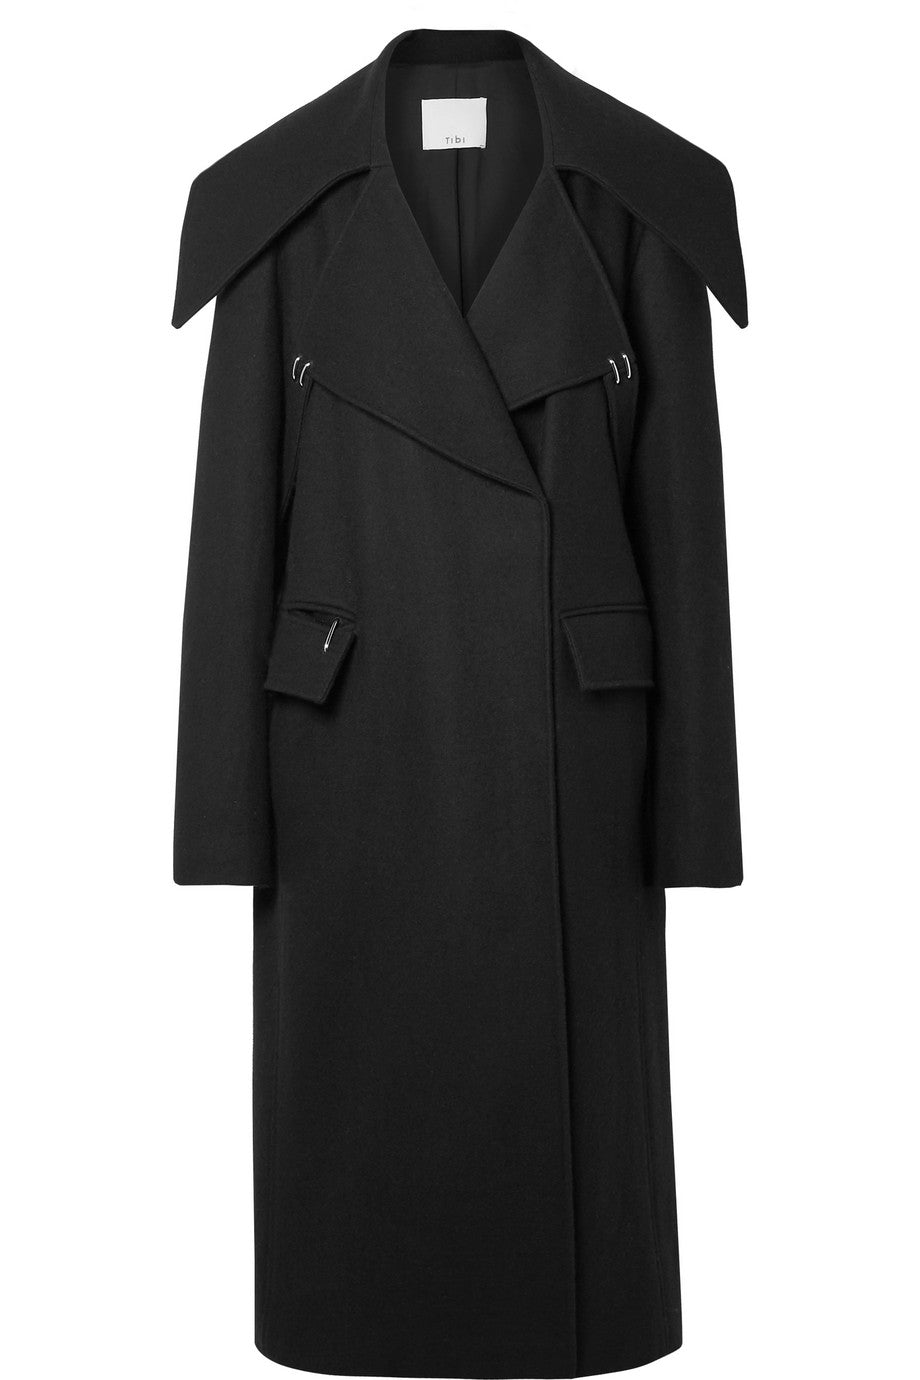 Tibi - Black oversized embellished wool blend coat